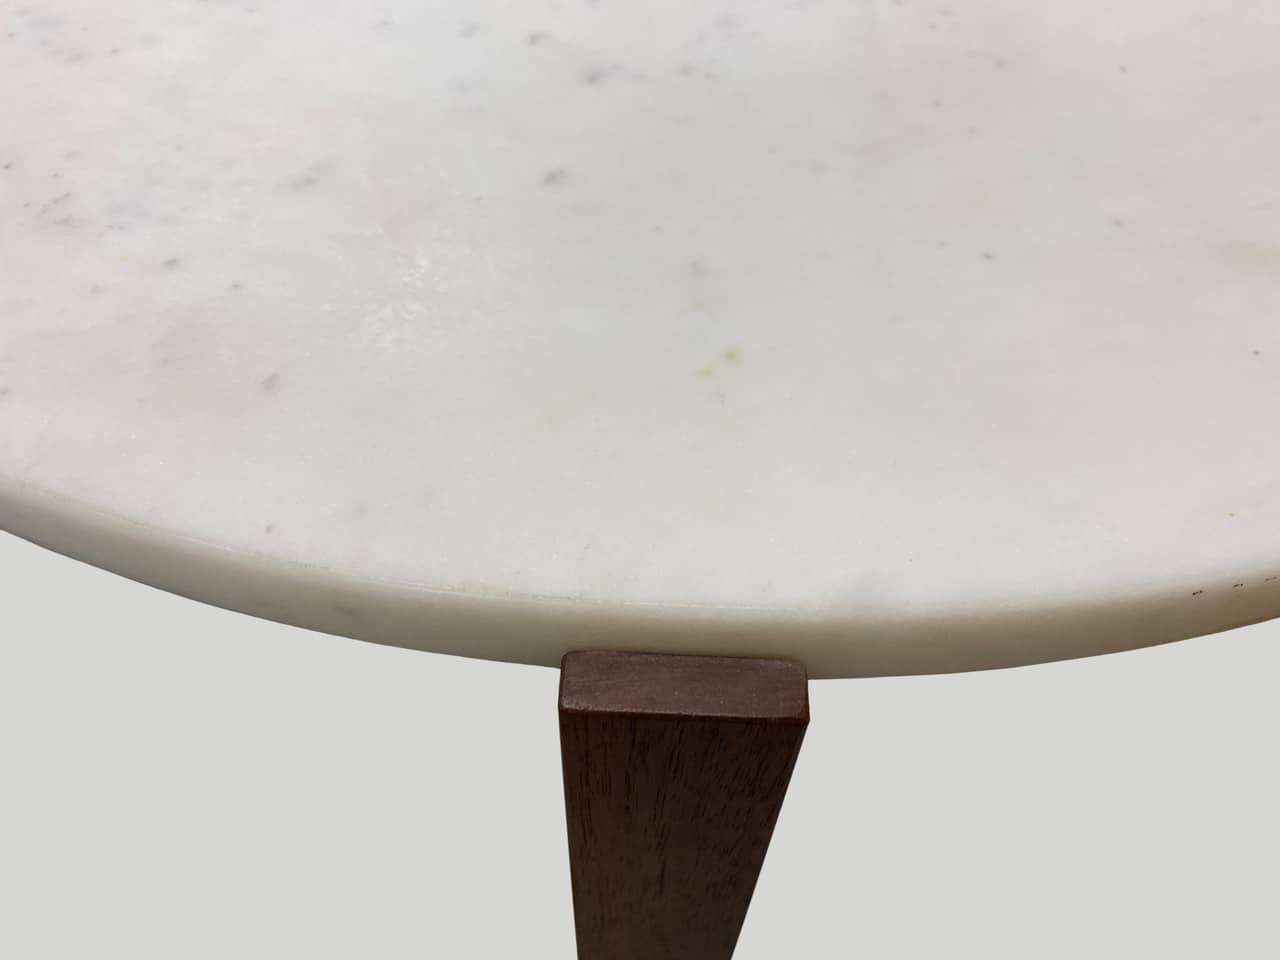 Italian marble side table